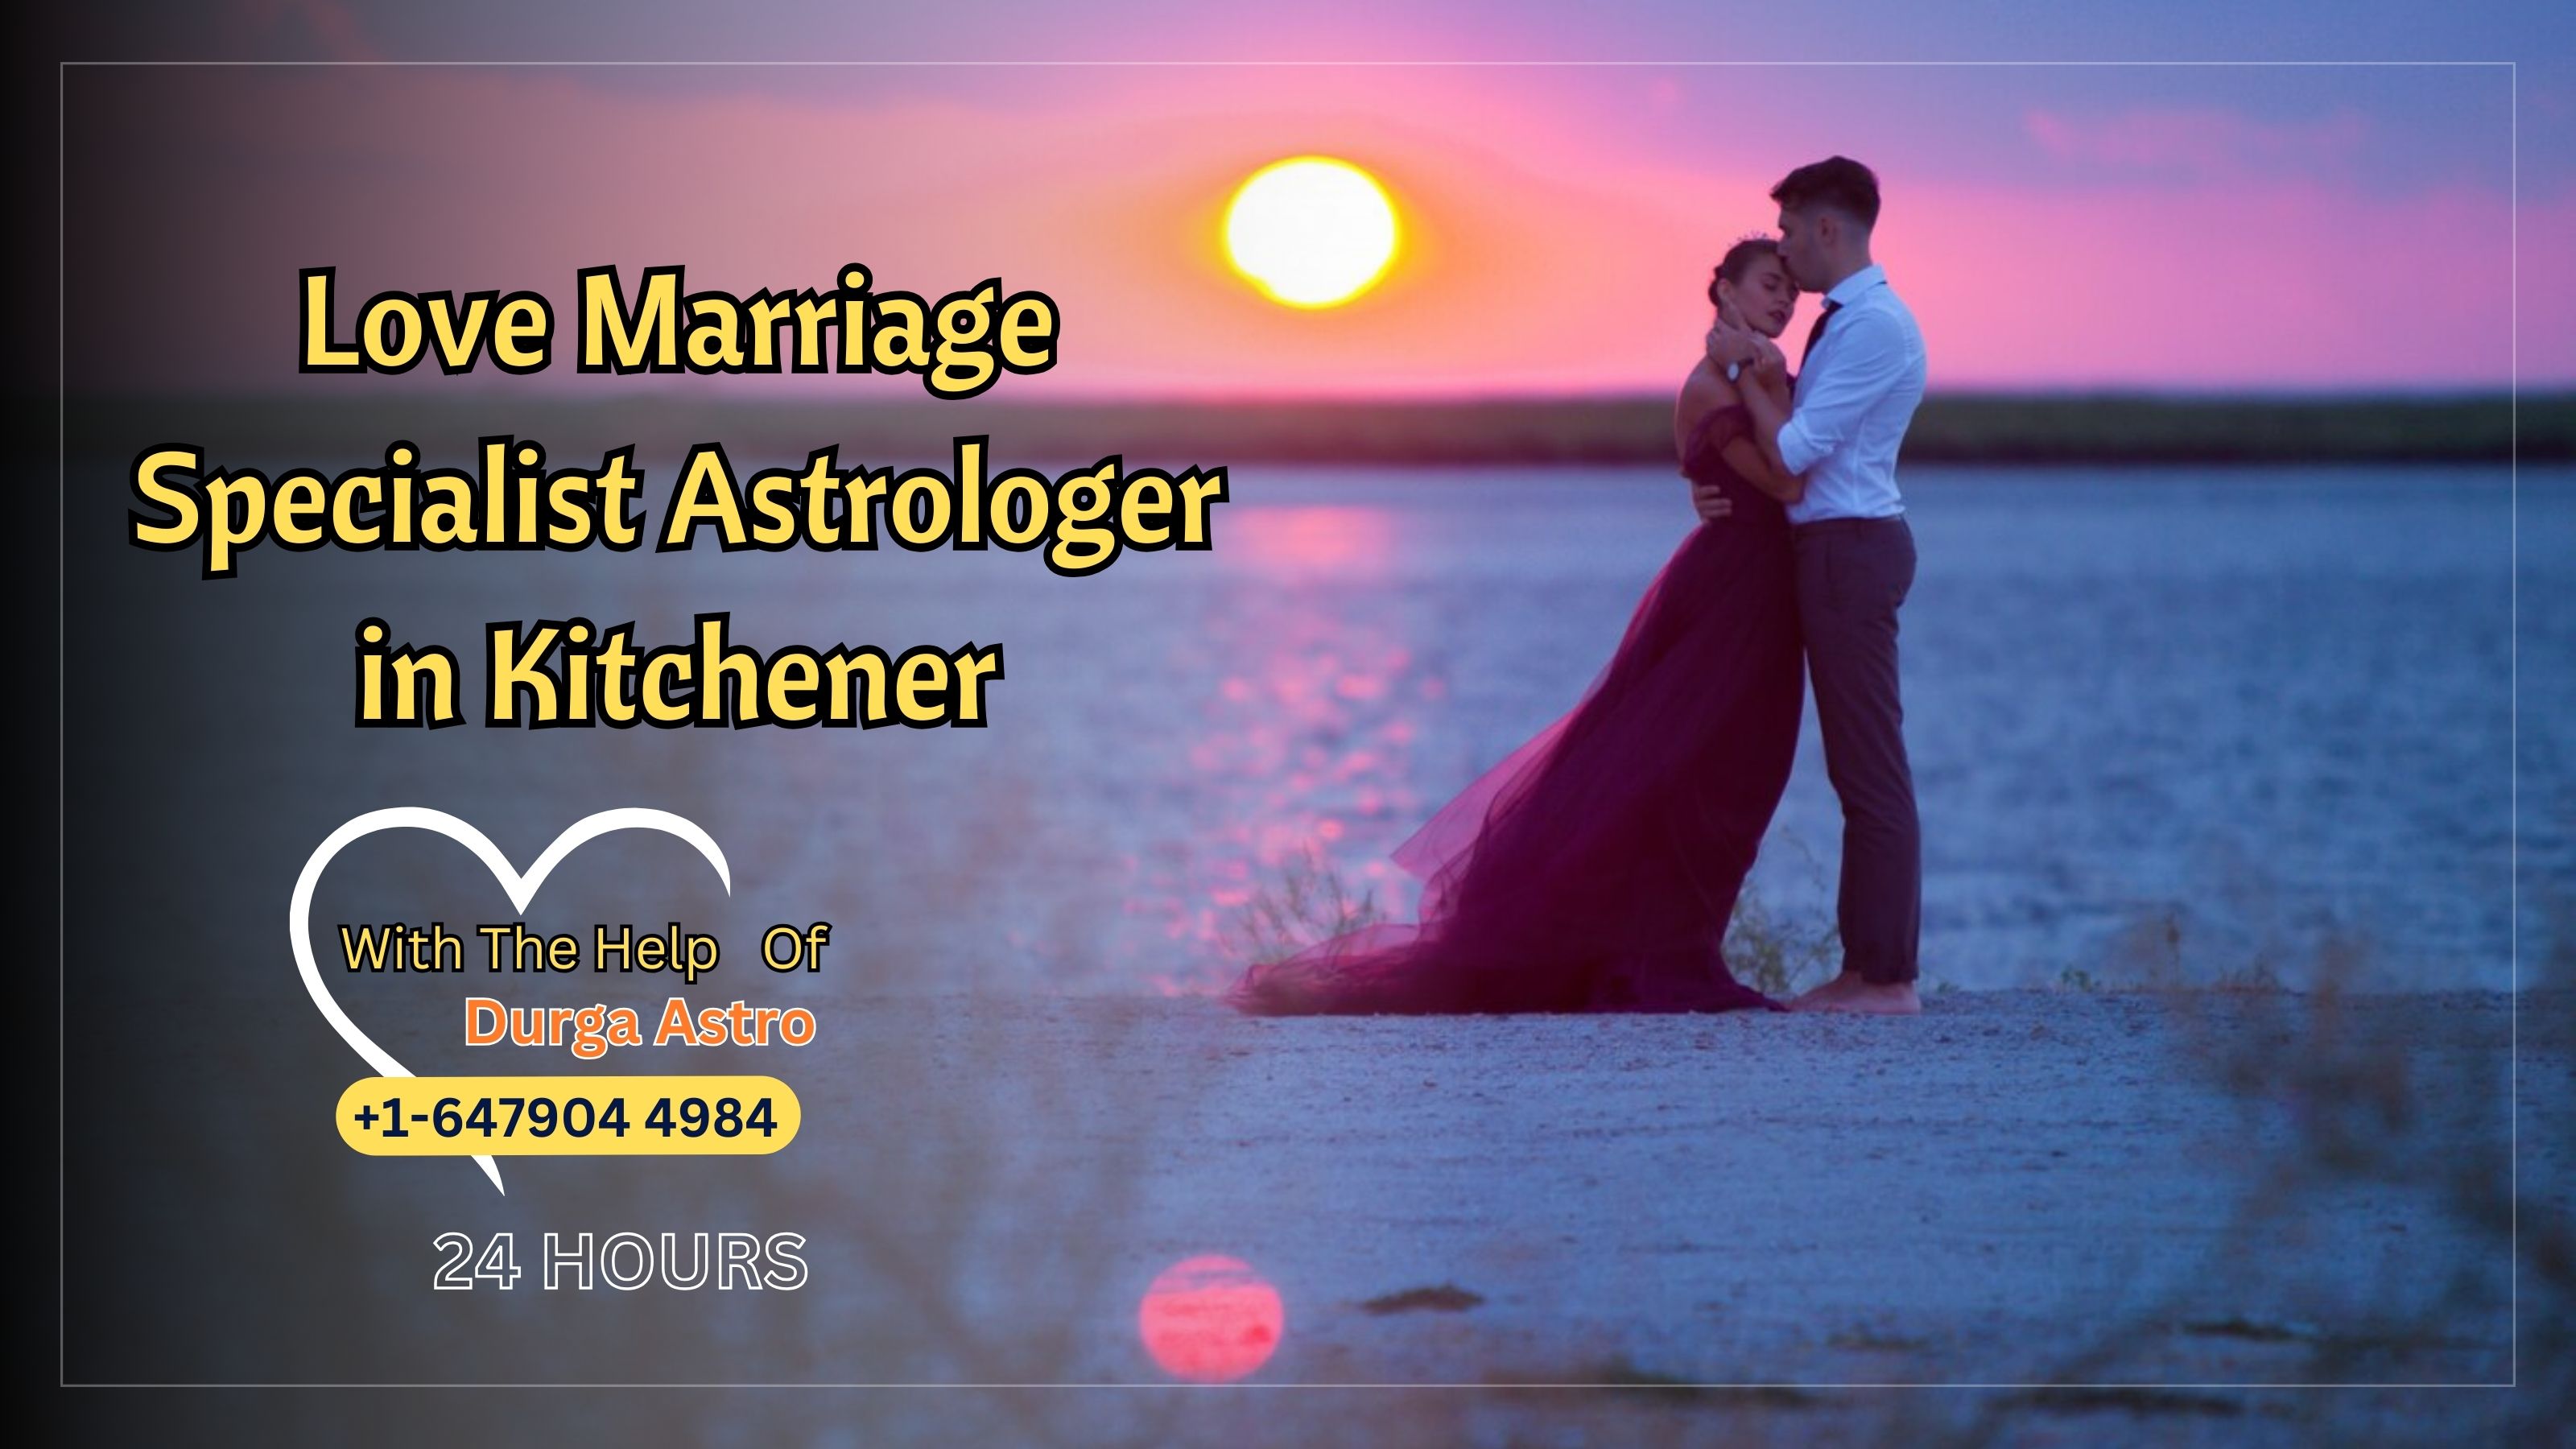 Love Marriage Specialist Astrologer in Kitchener